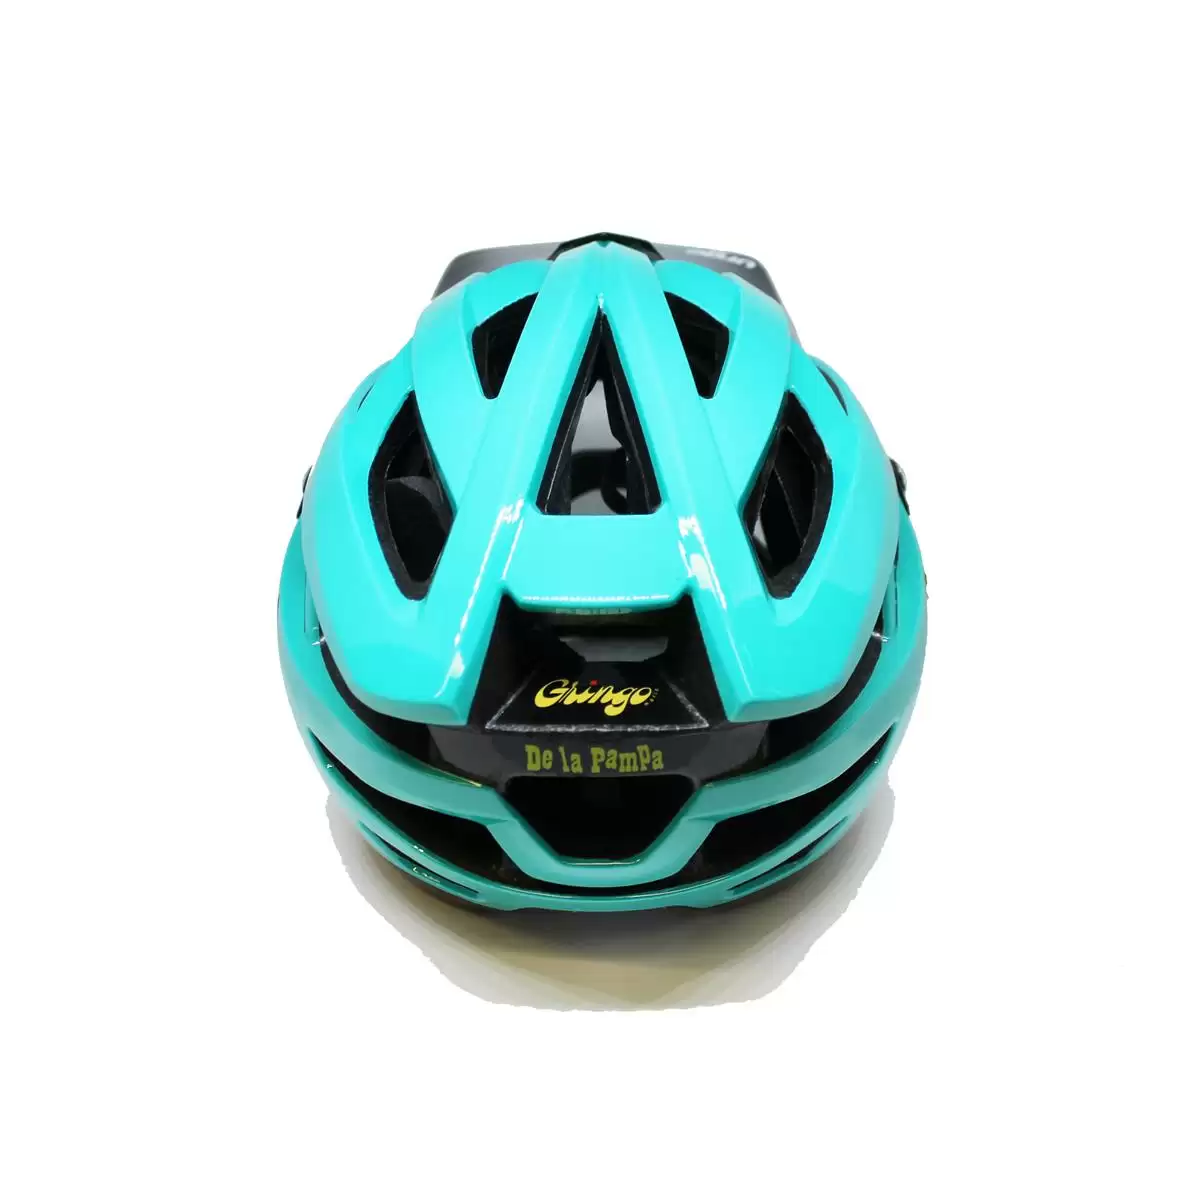 Full face helmet Gringo de la Pampa light blue size L/XL (58-61) #3